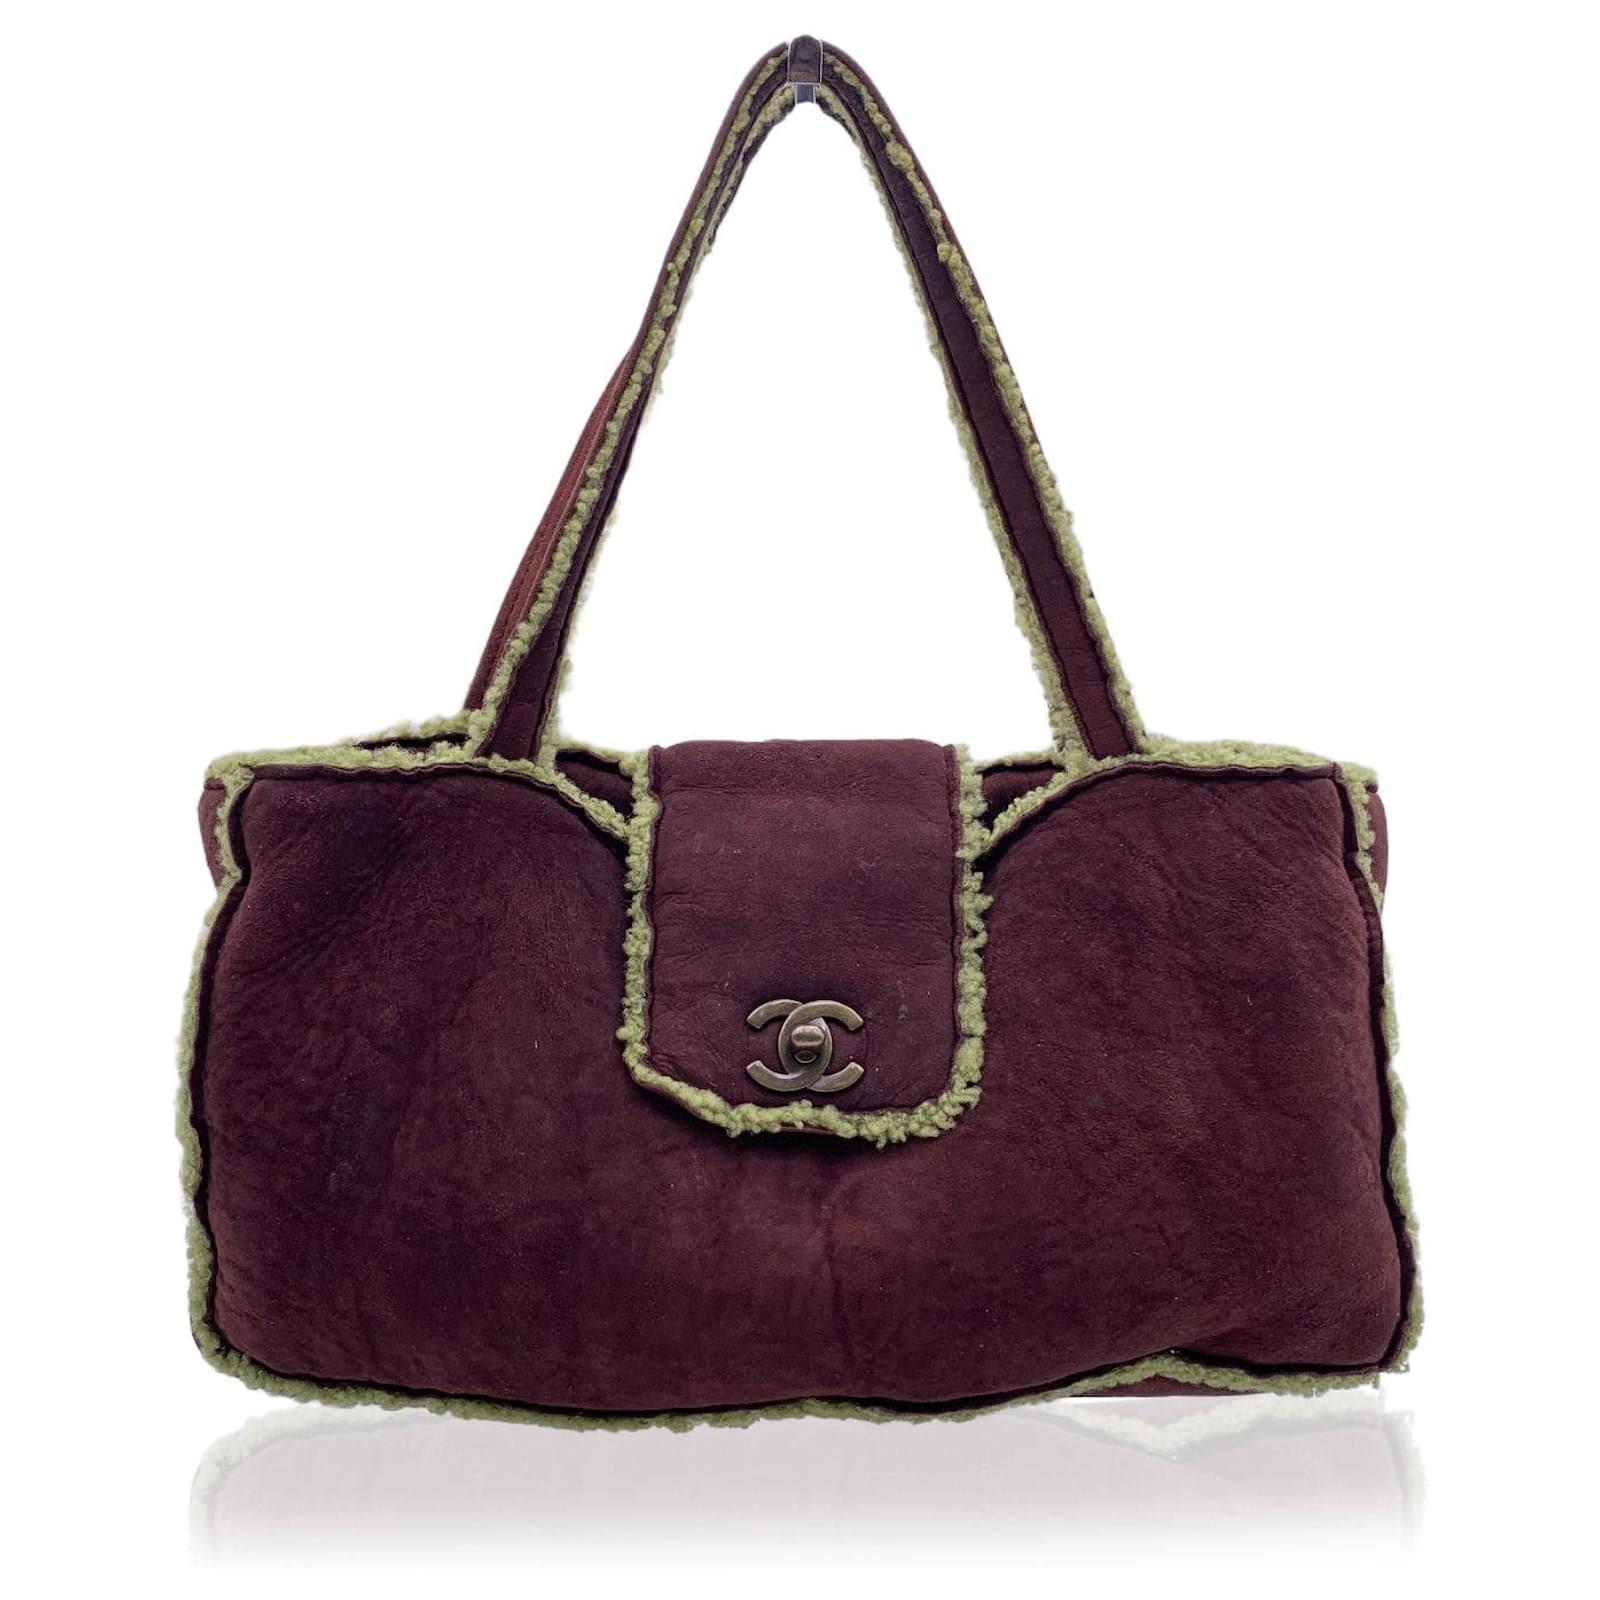 Chanel Vintage Brown and Green Suede Shearling Tote Bag Handbag